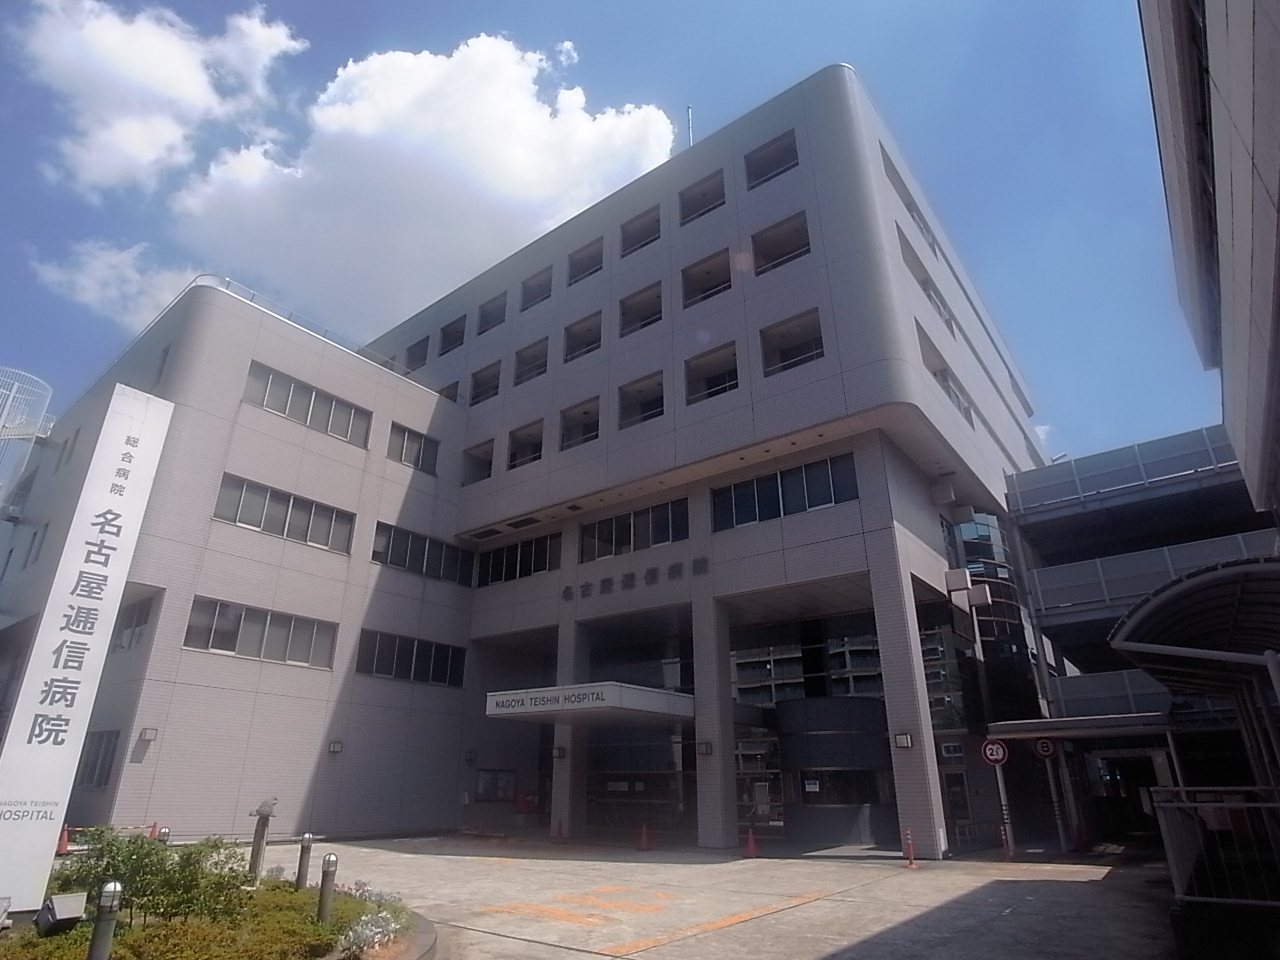 Hospital. 615m to Nagoya Teishin hospital (hospital)